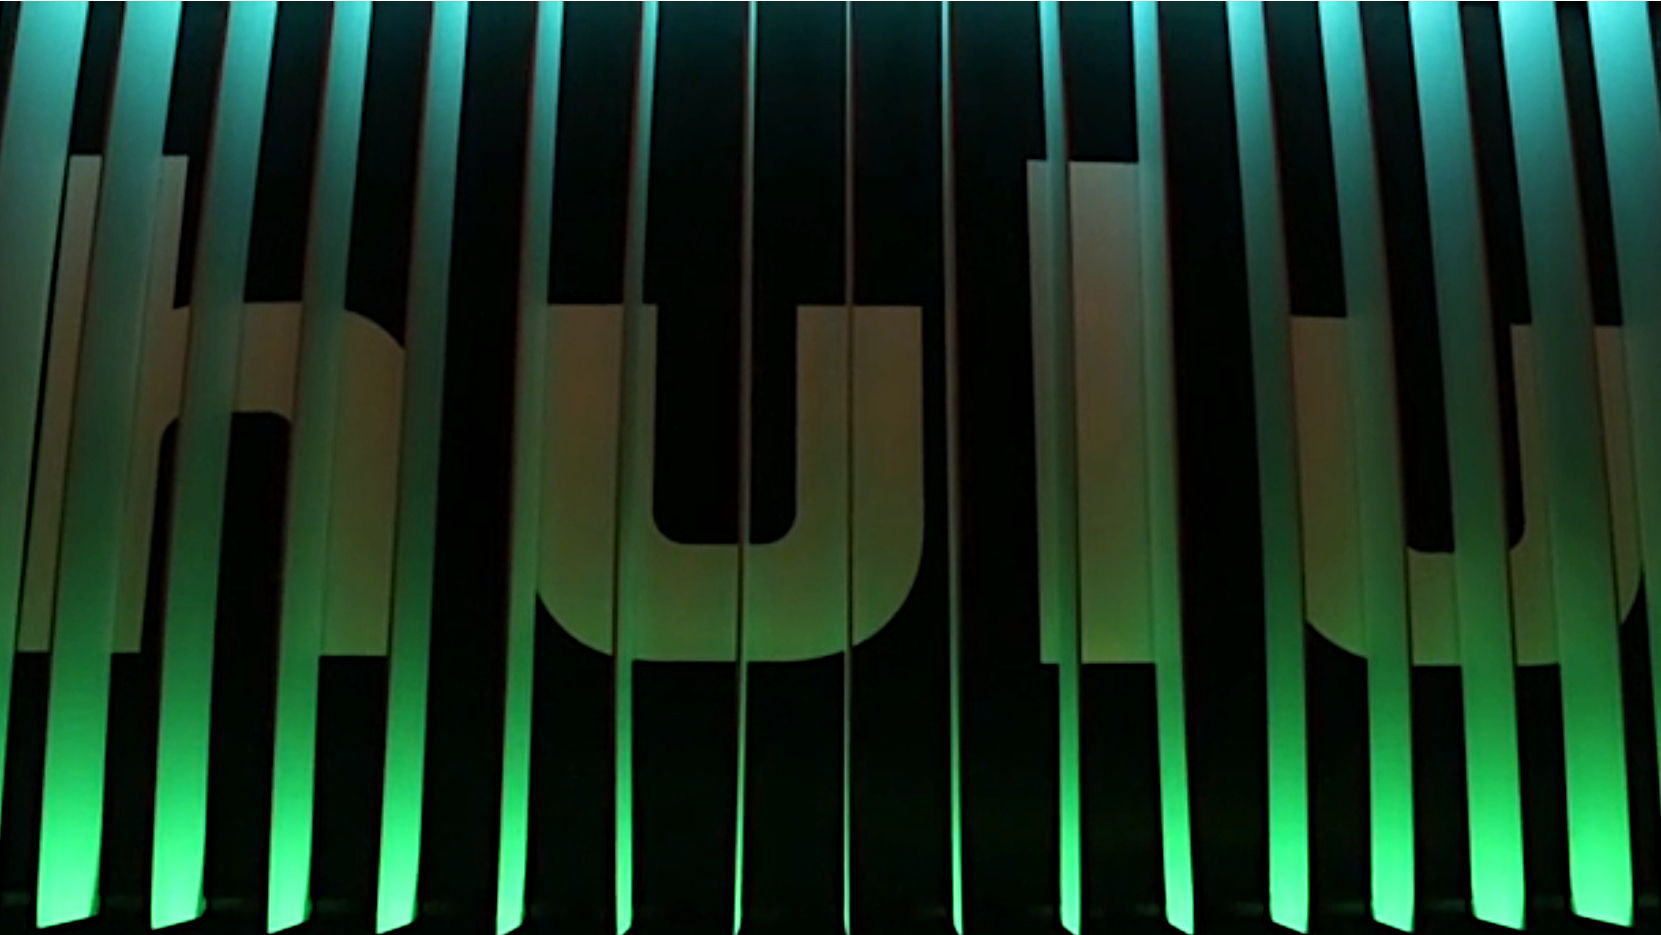 Hulu logo in the shades